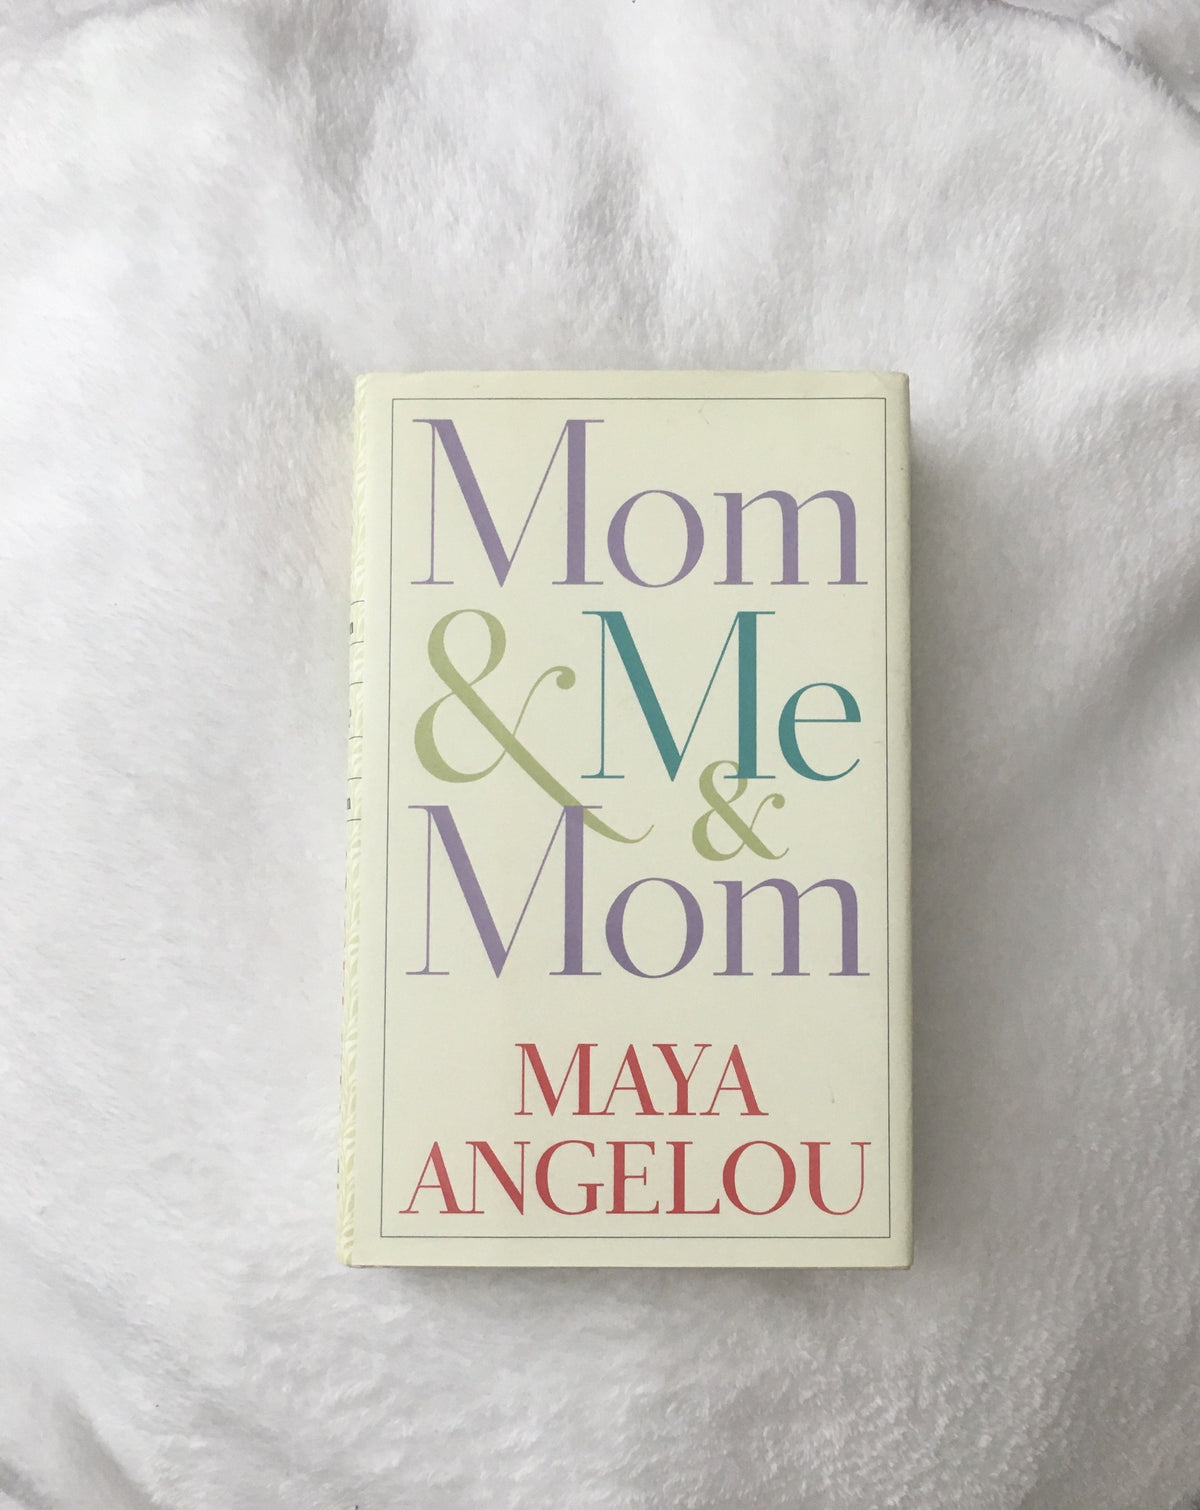 Mom &amp; Me &amp; Mom by Maya Angelou, book, Ten Dollar Books, Ten Dollar Books